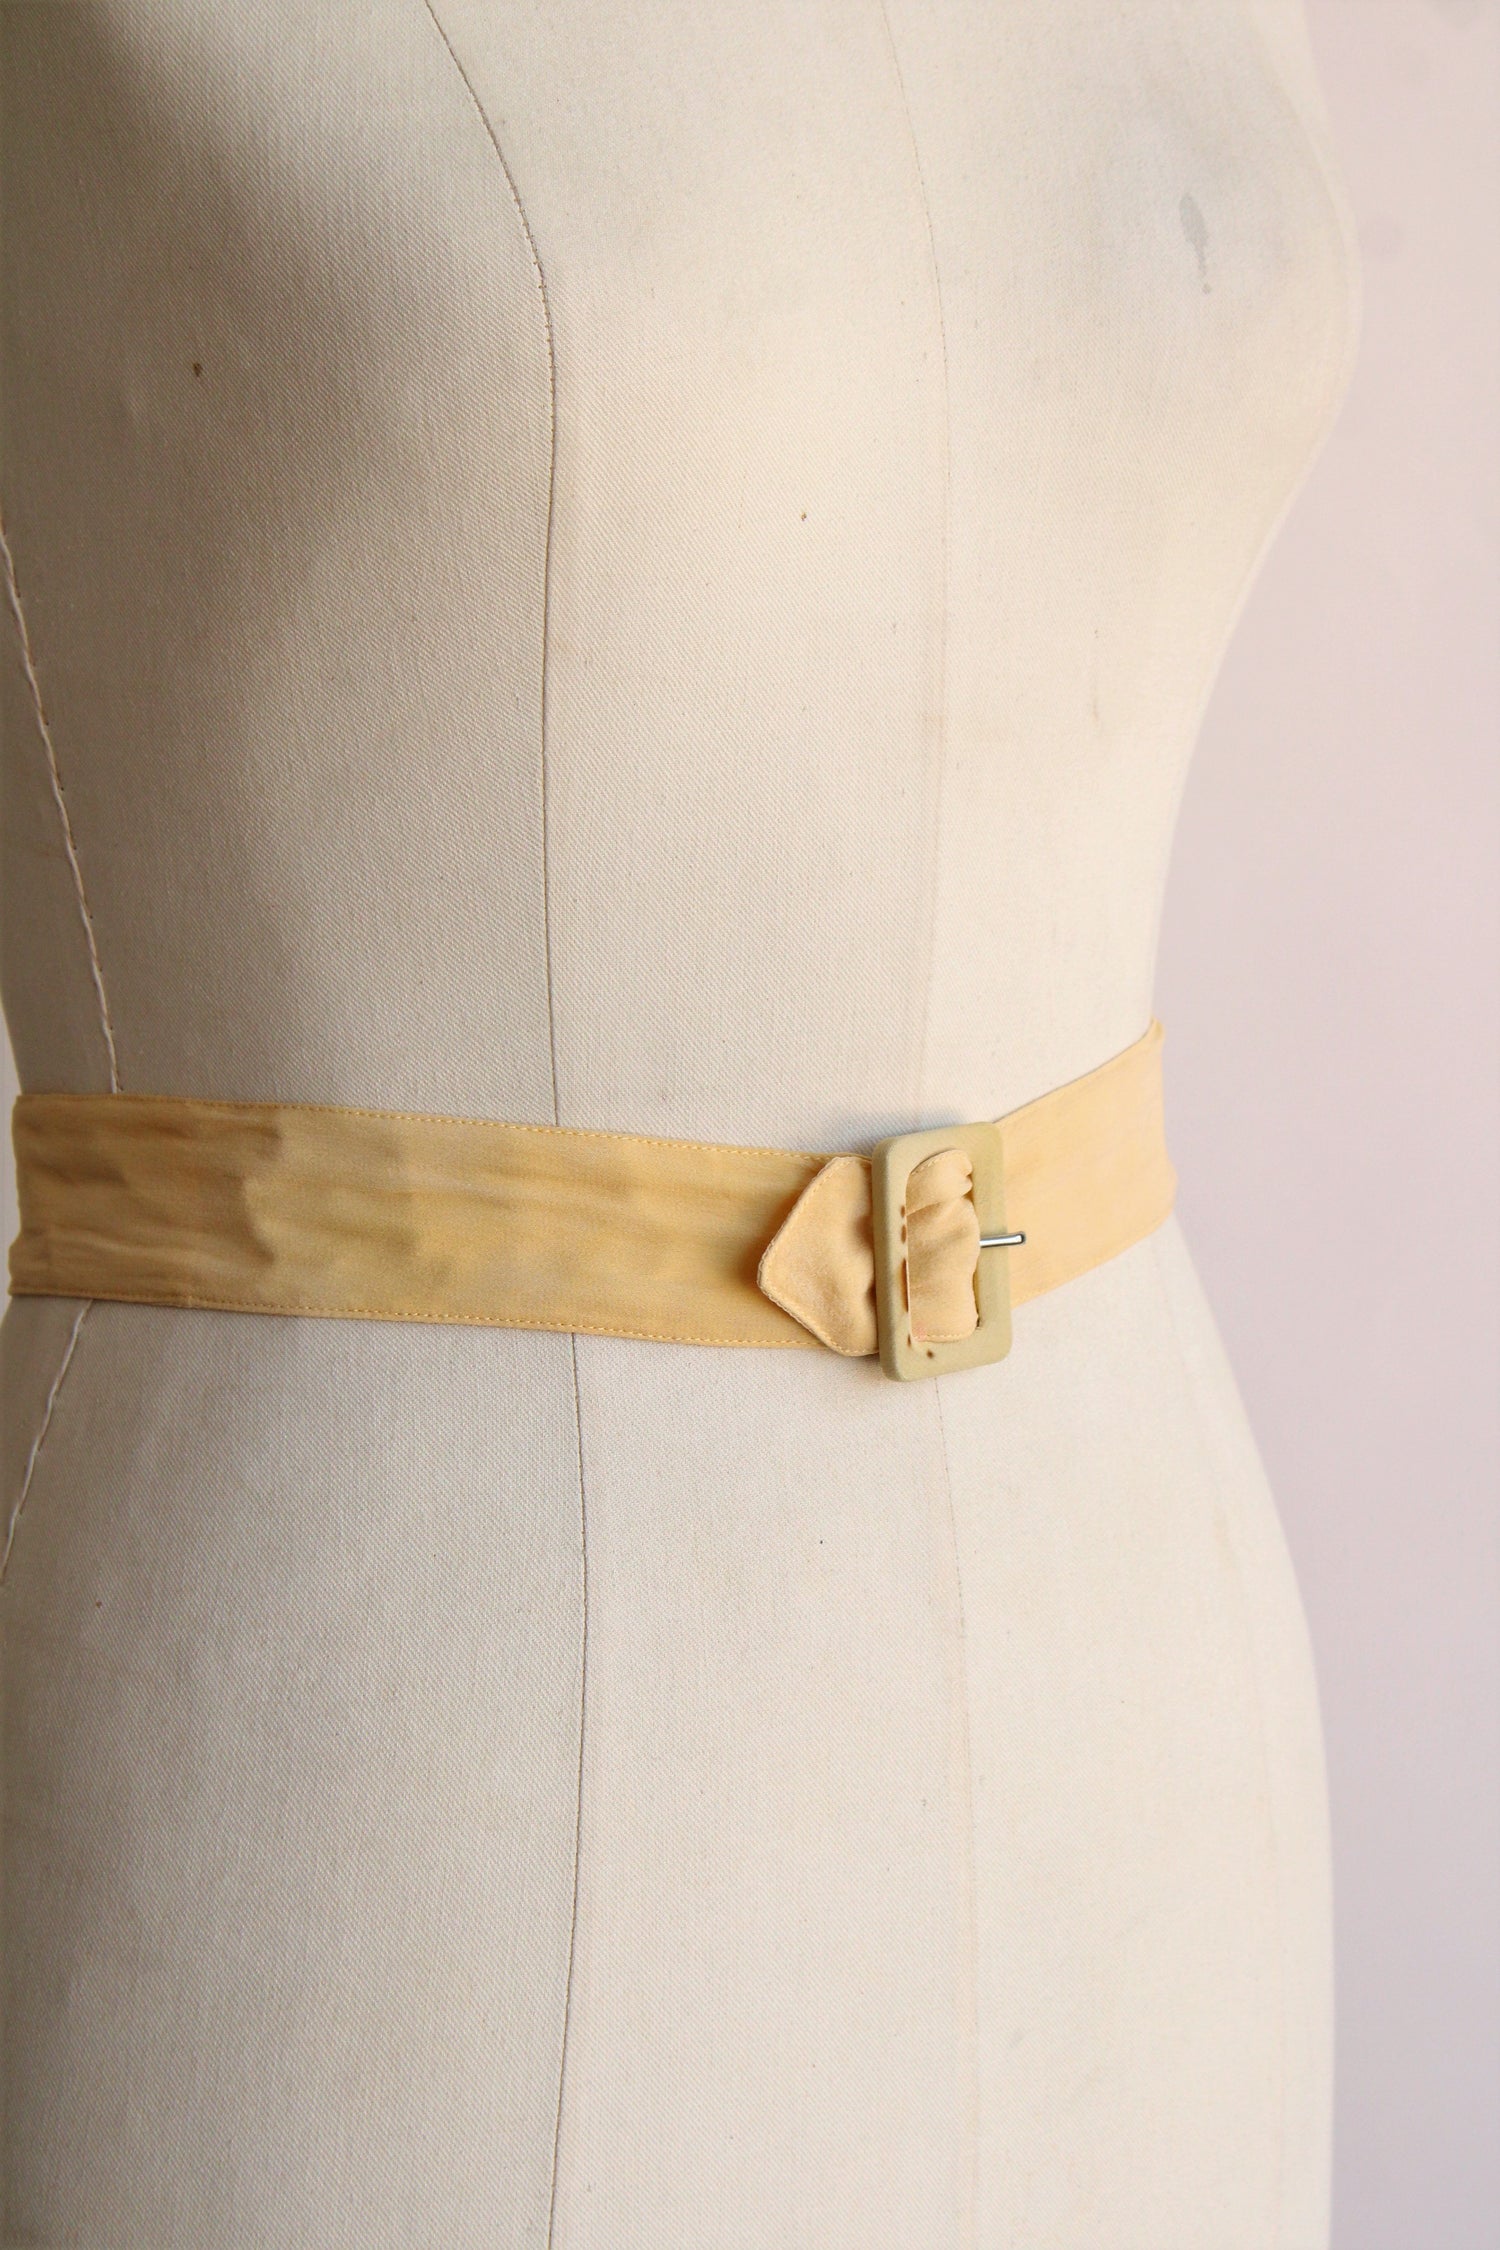 Vintage 1940s Yellow Silk Belt